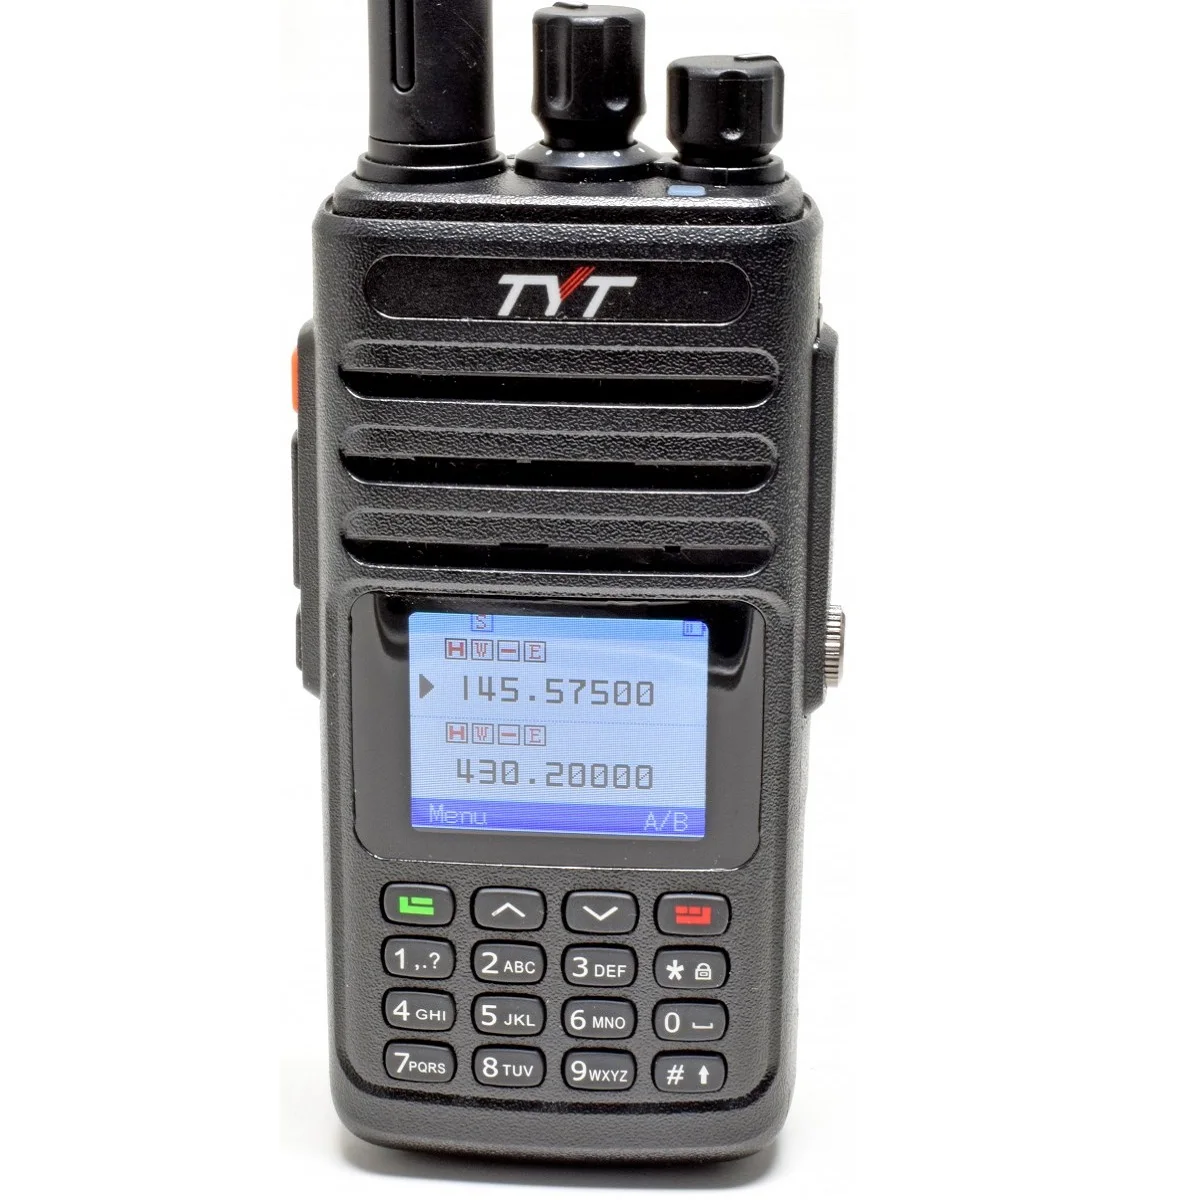 TYT UV8200 Ham Amateur Transceiver 10W Power WaterProof IP67 LED Screen Voice Prompt Outdoor Radio Communication